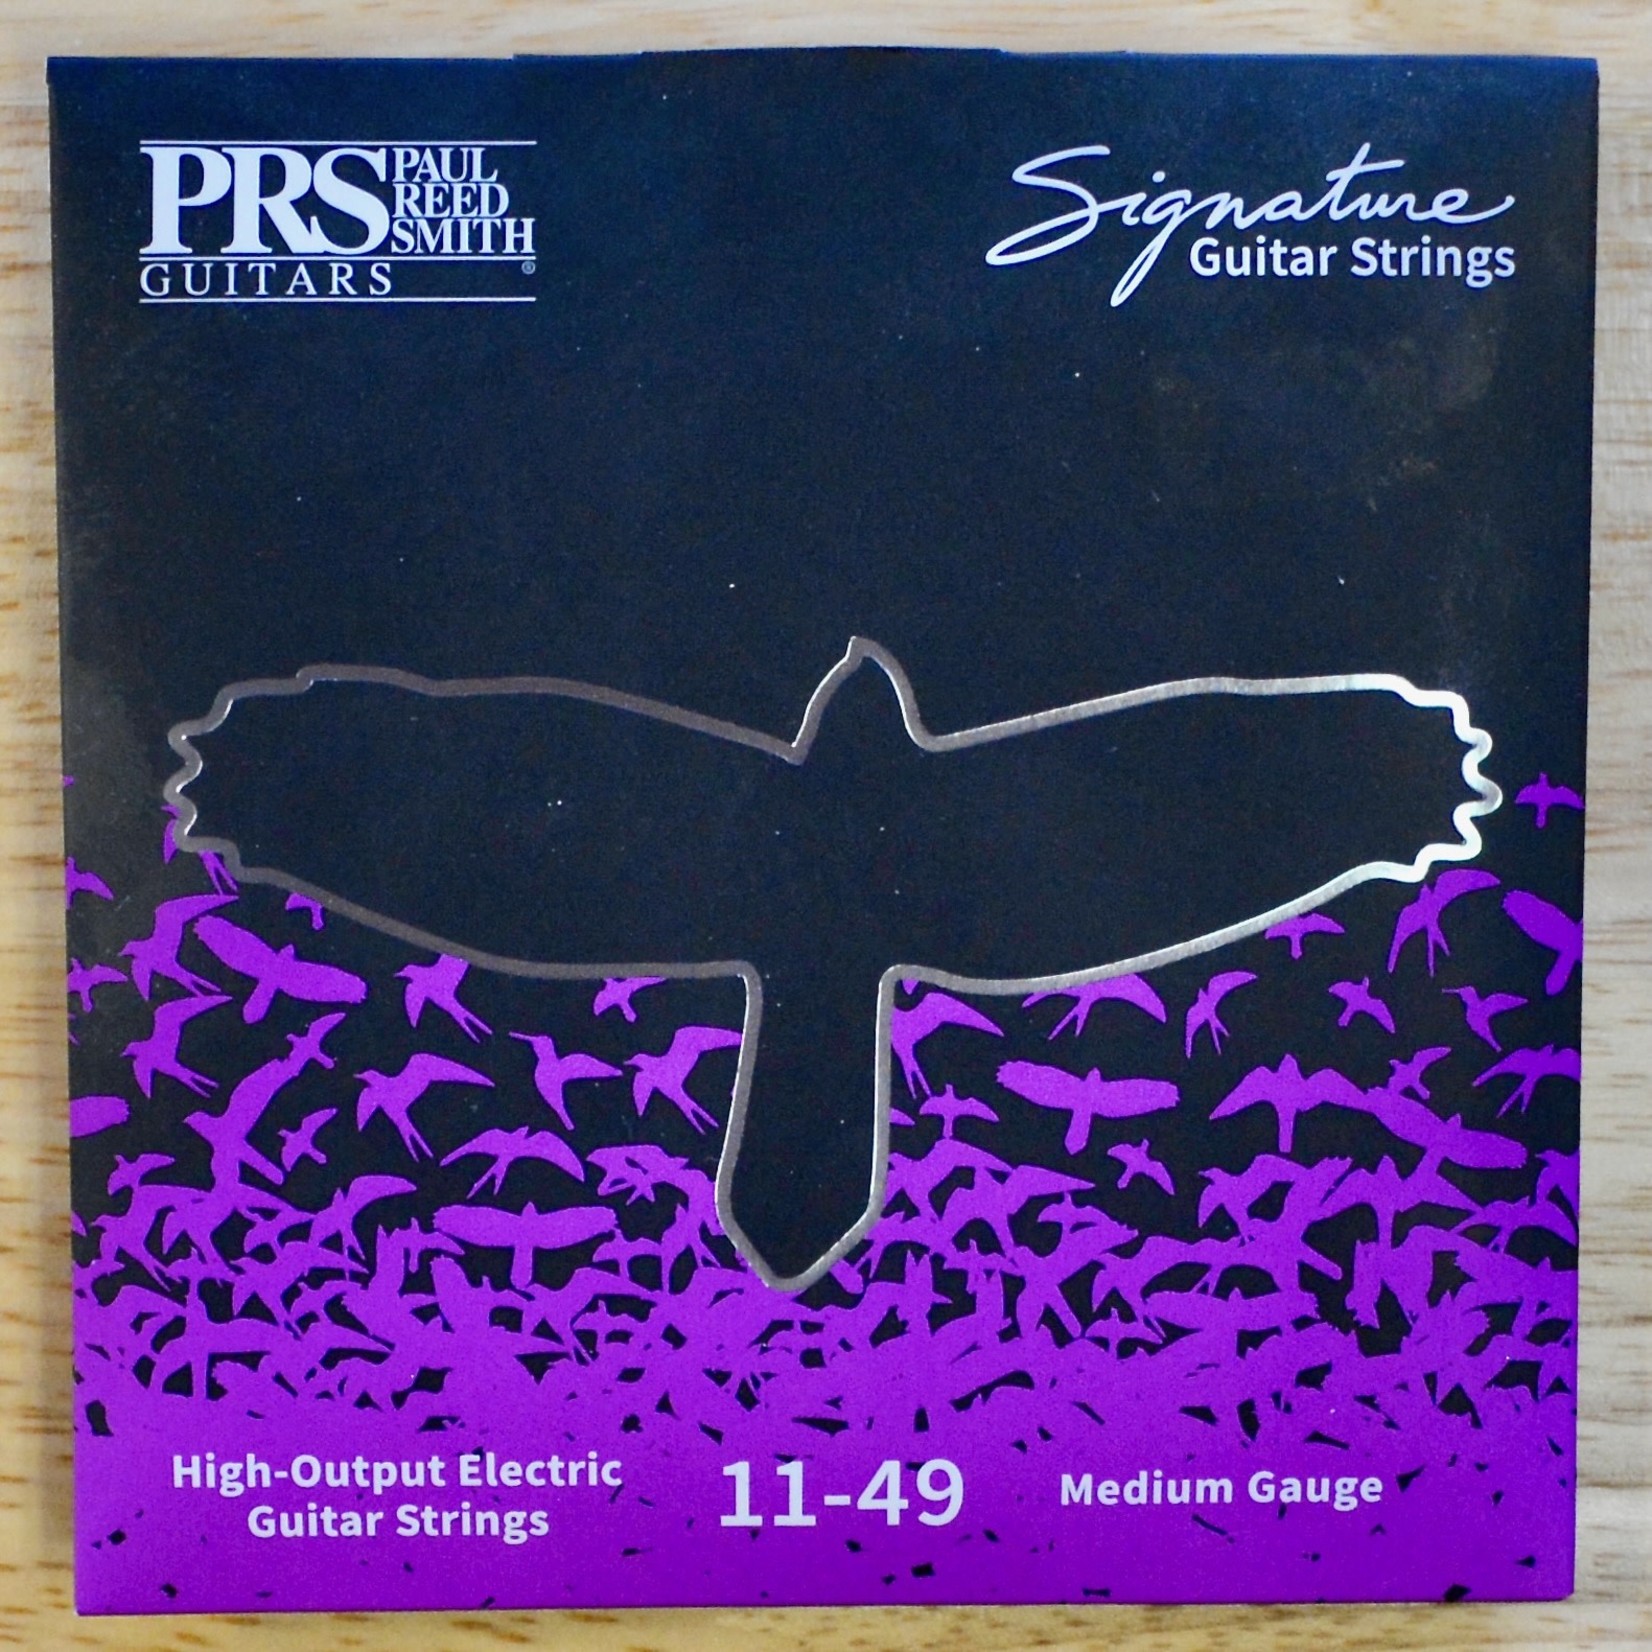 Paul Reed Smith PRS Signature Medium Guitar Strings 11-49